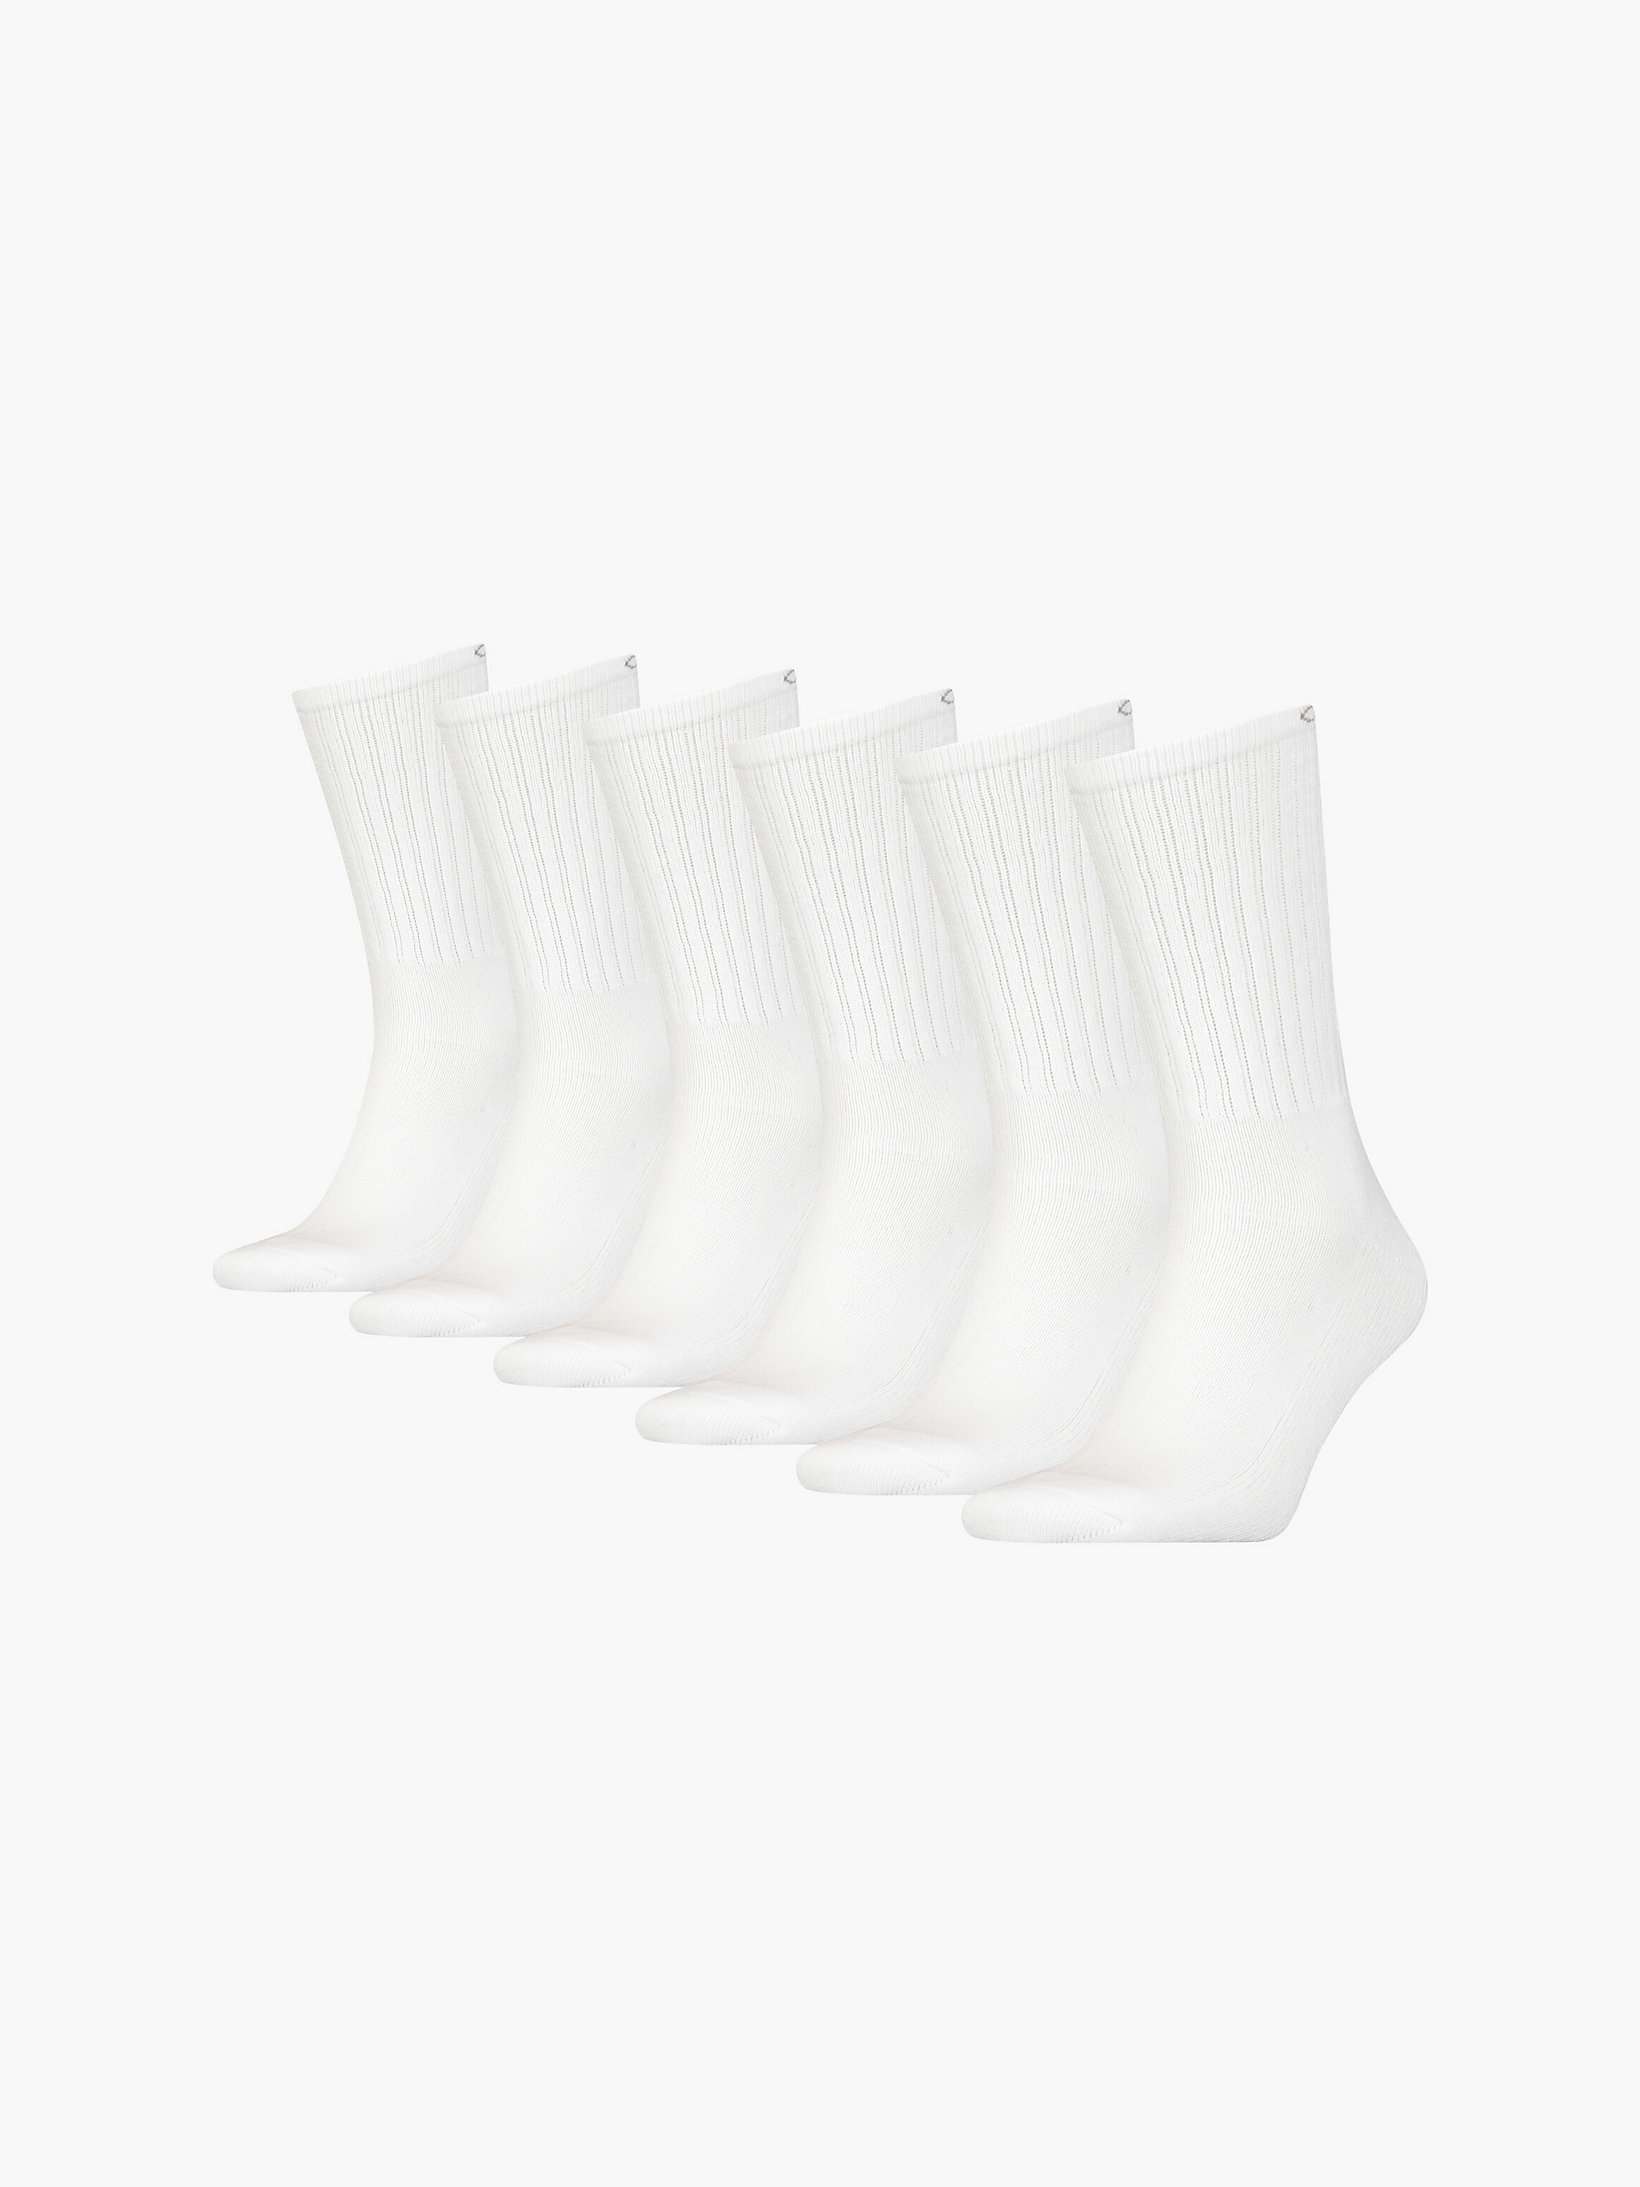 Calvin Klein Men's Crew Socks